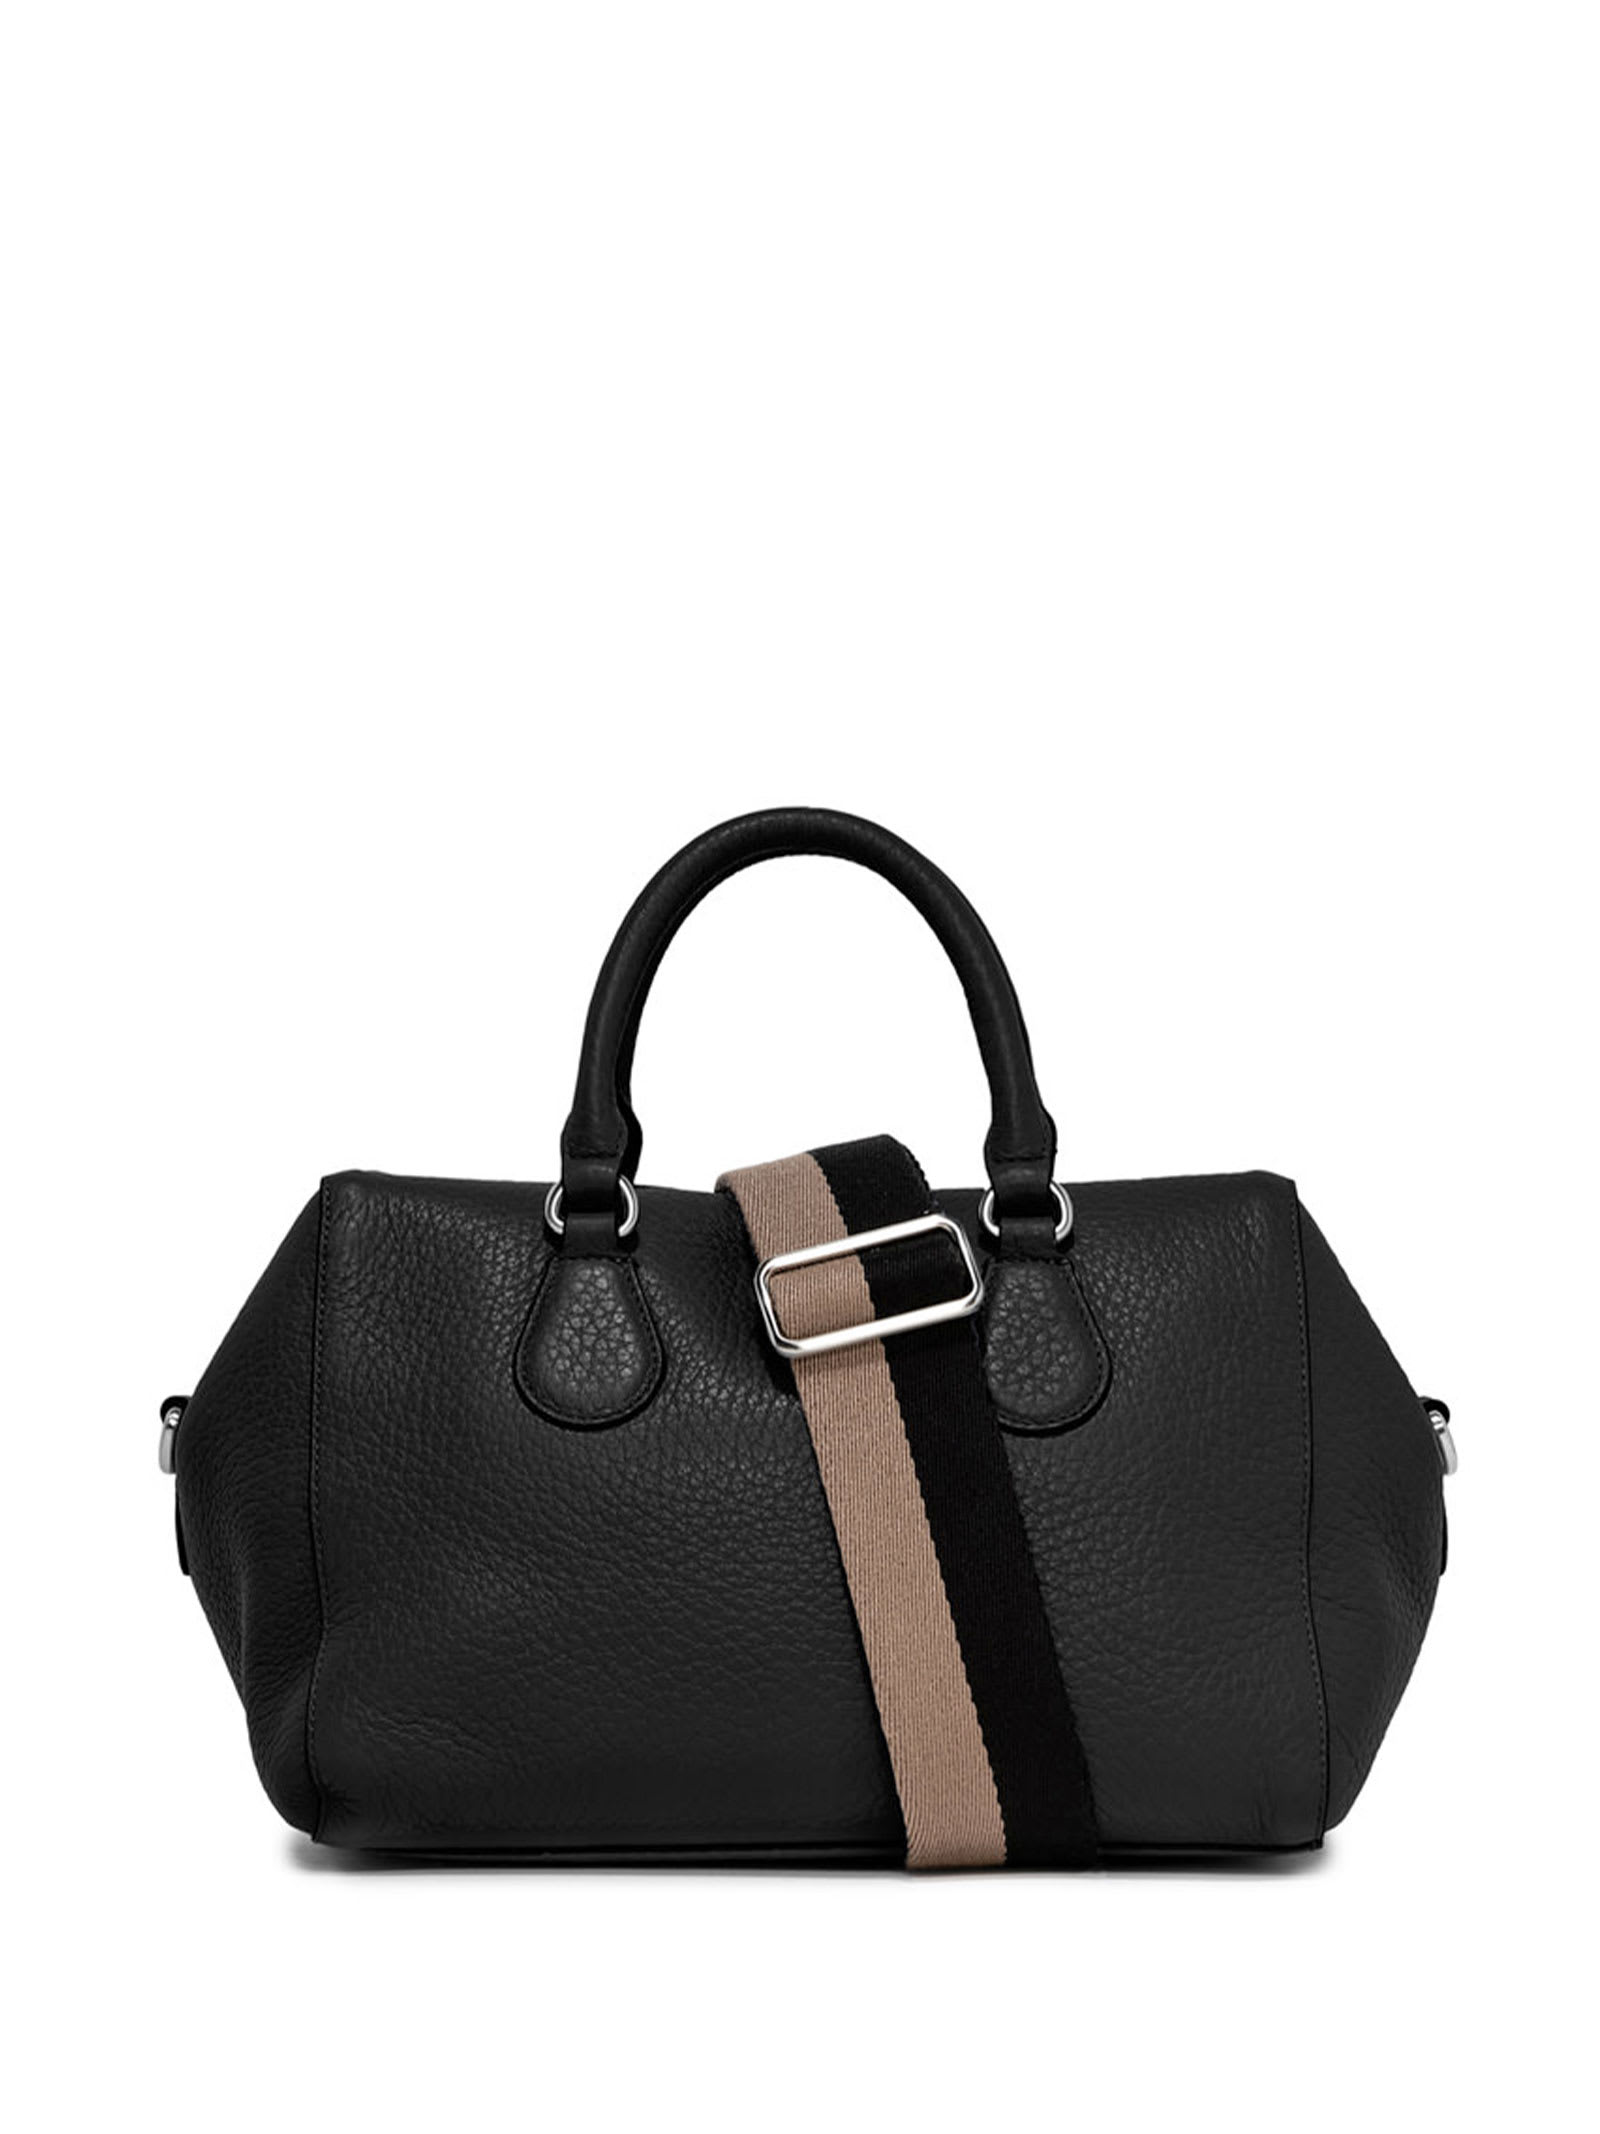 Gianni Chiarini Dora Bag In Smooth Leather